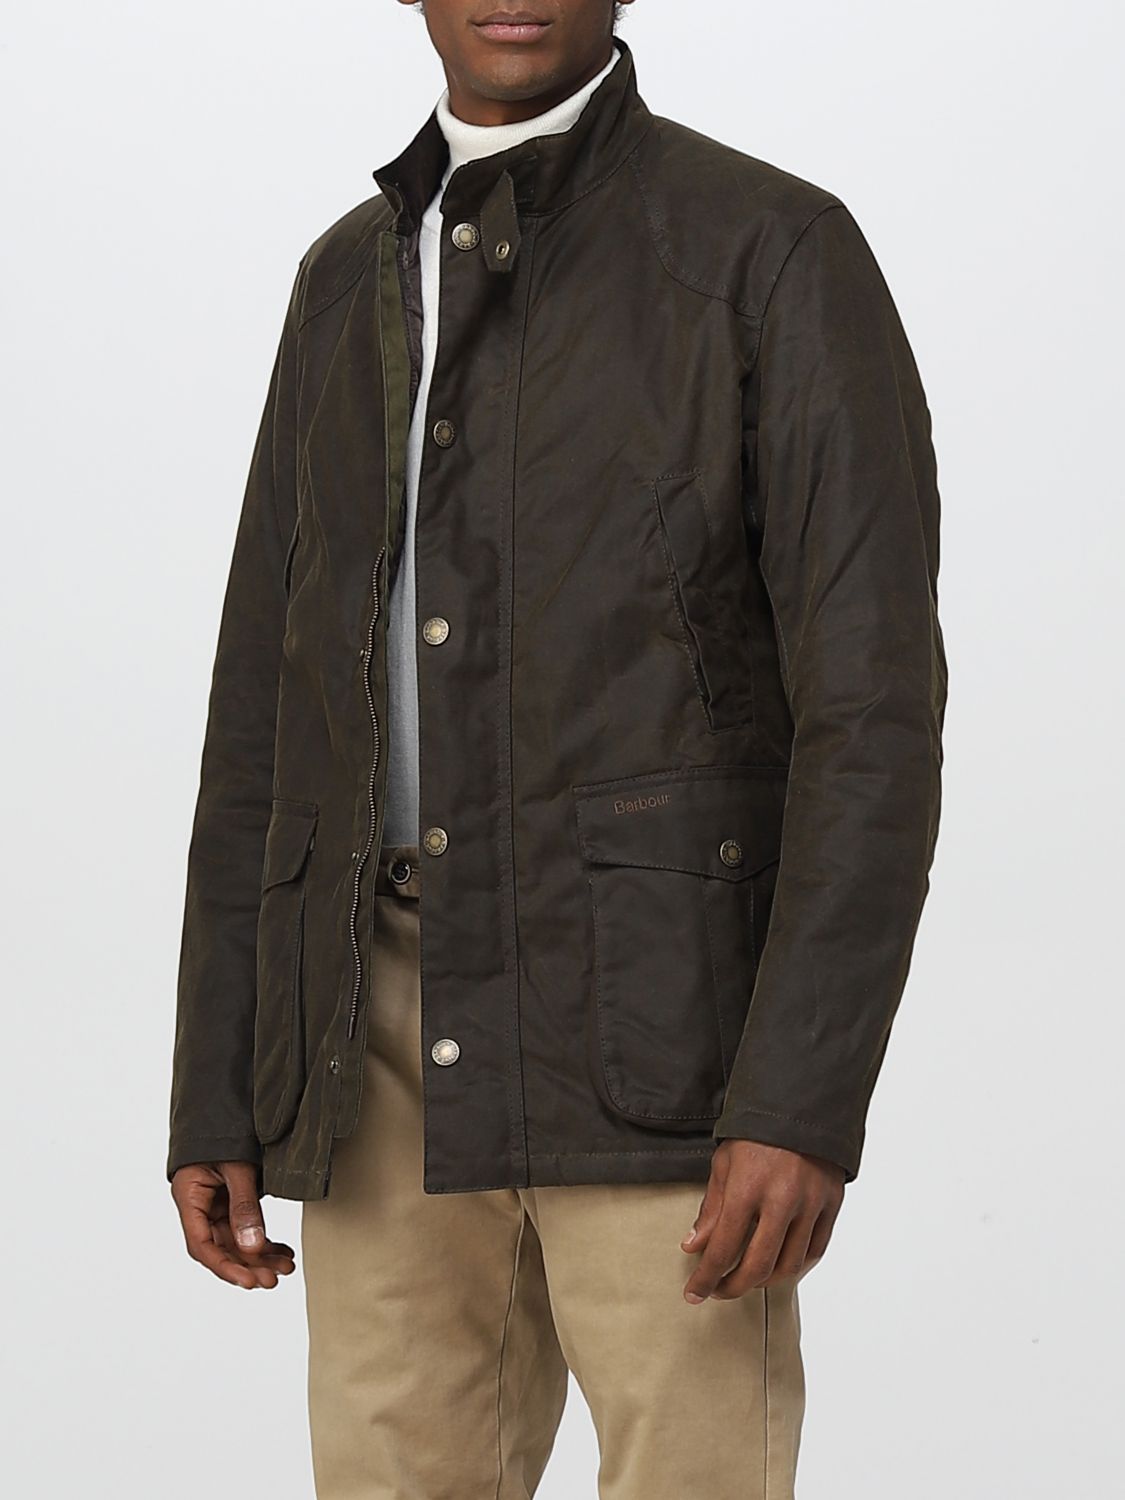 BARBOUR: jacket for man - Olive | Barbour jacket MWX1082 online on ...